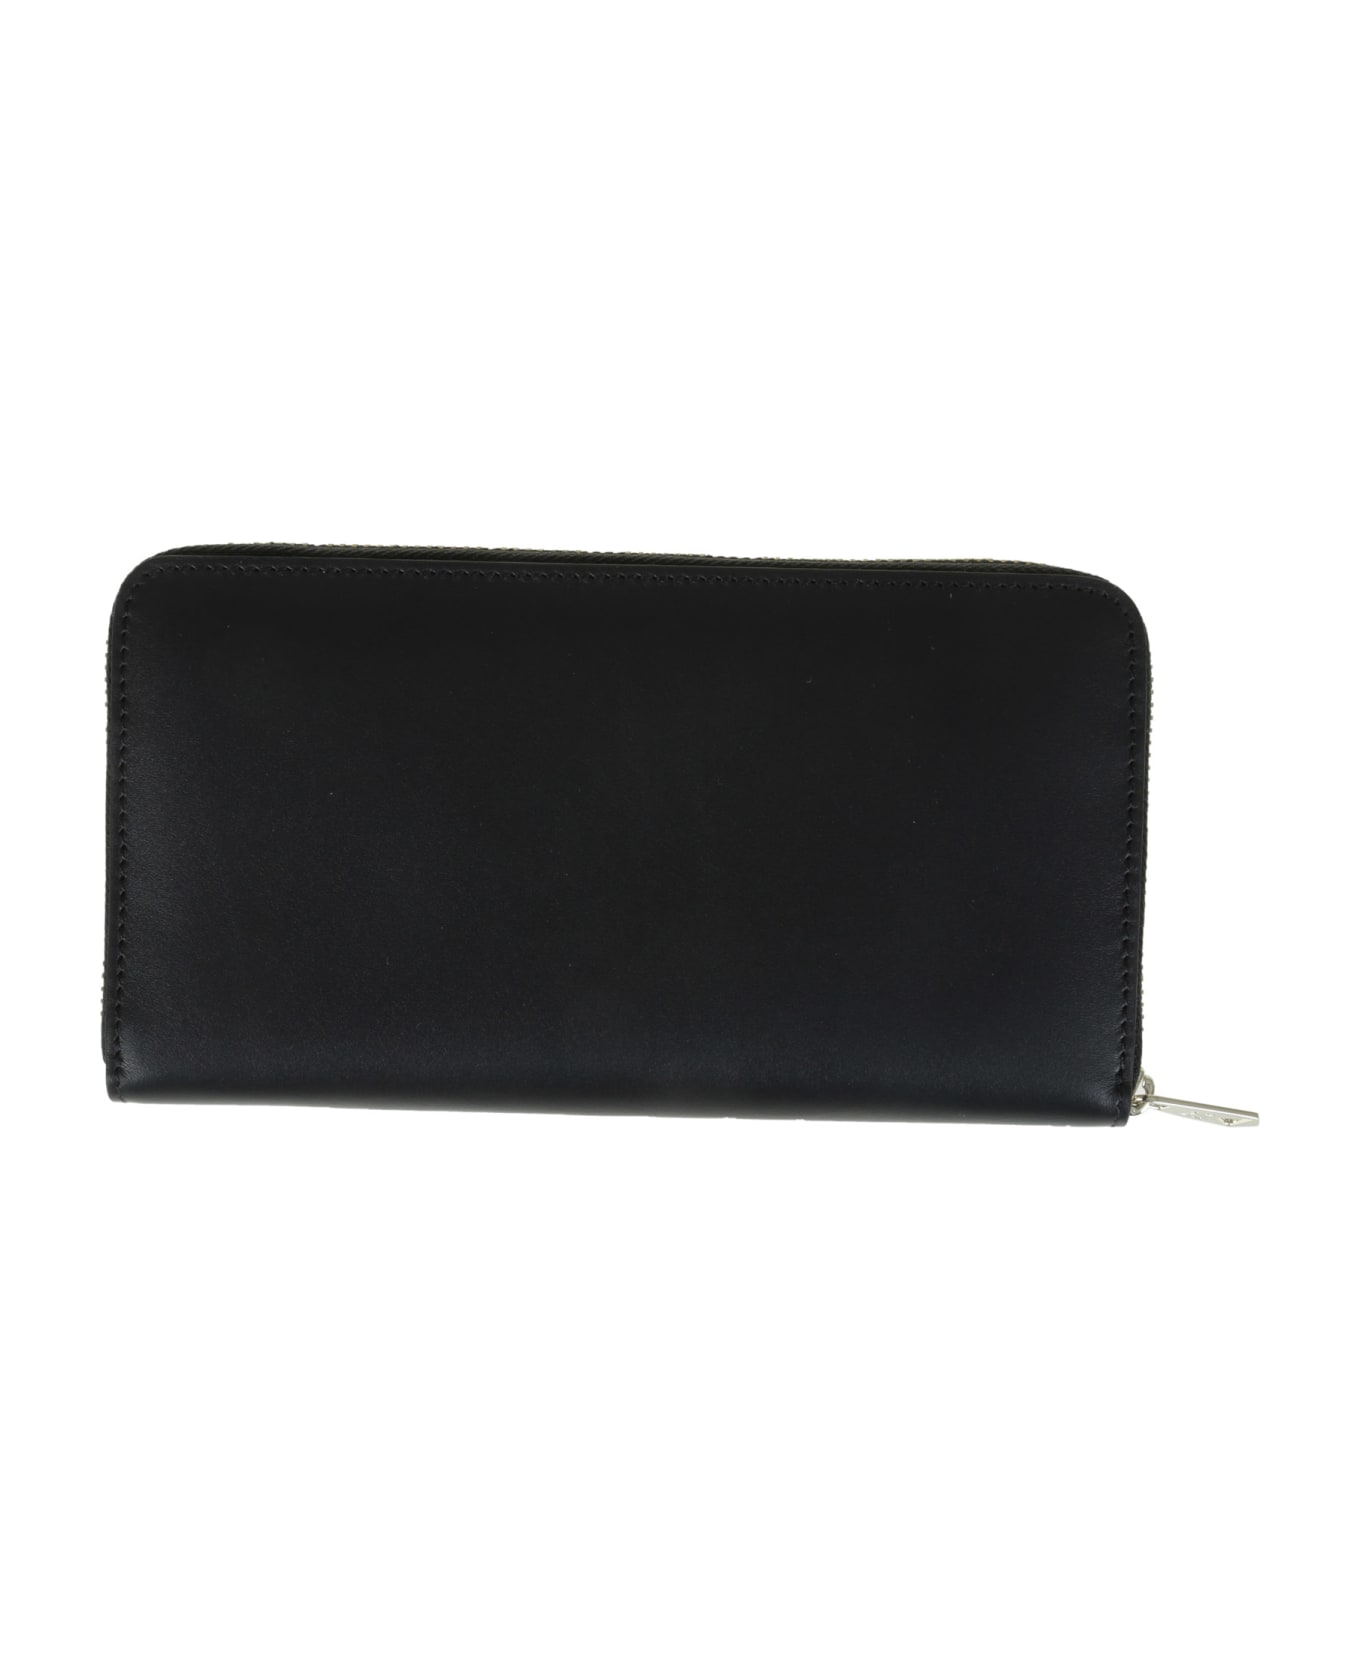 Paul Smith Wallet Lg Zip Intmul - Black 財布